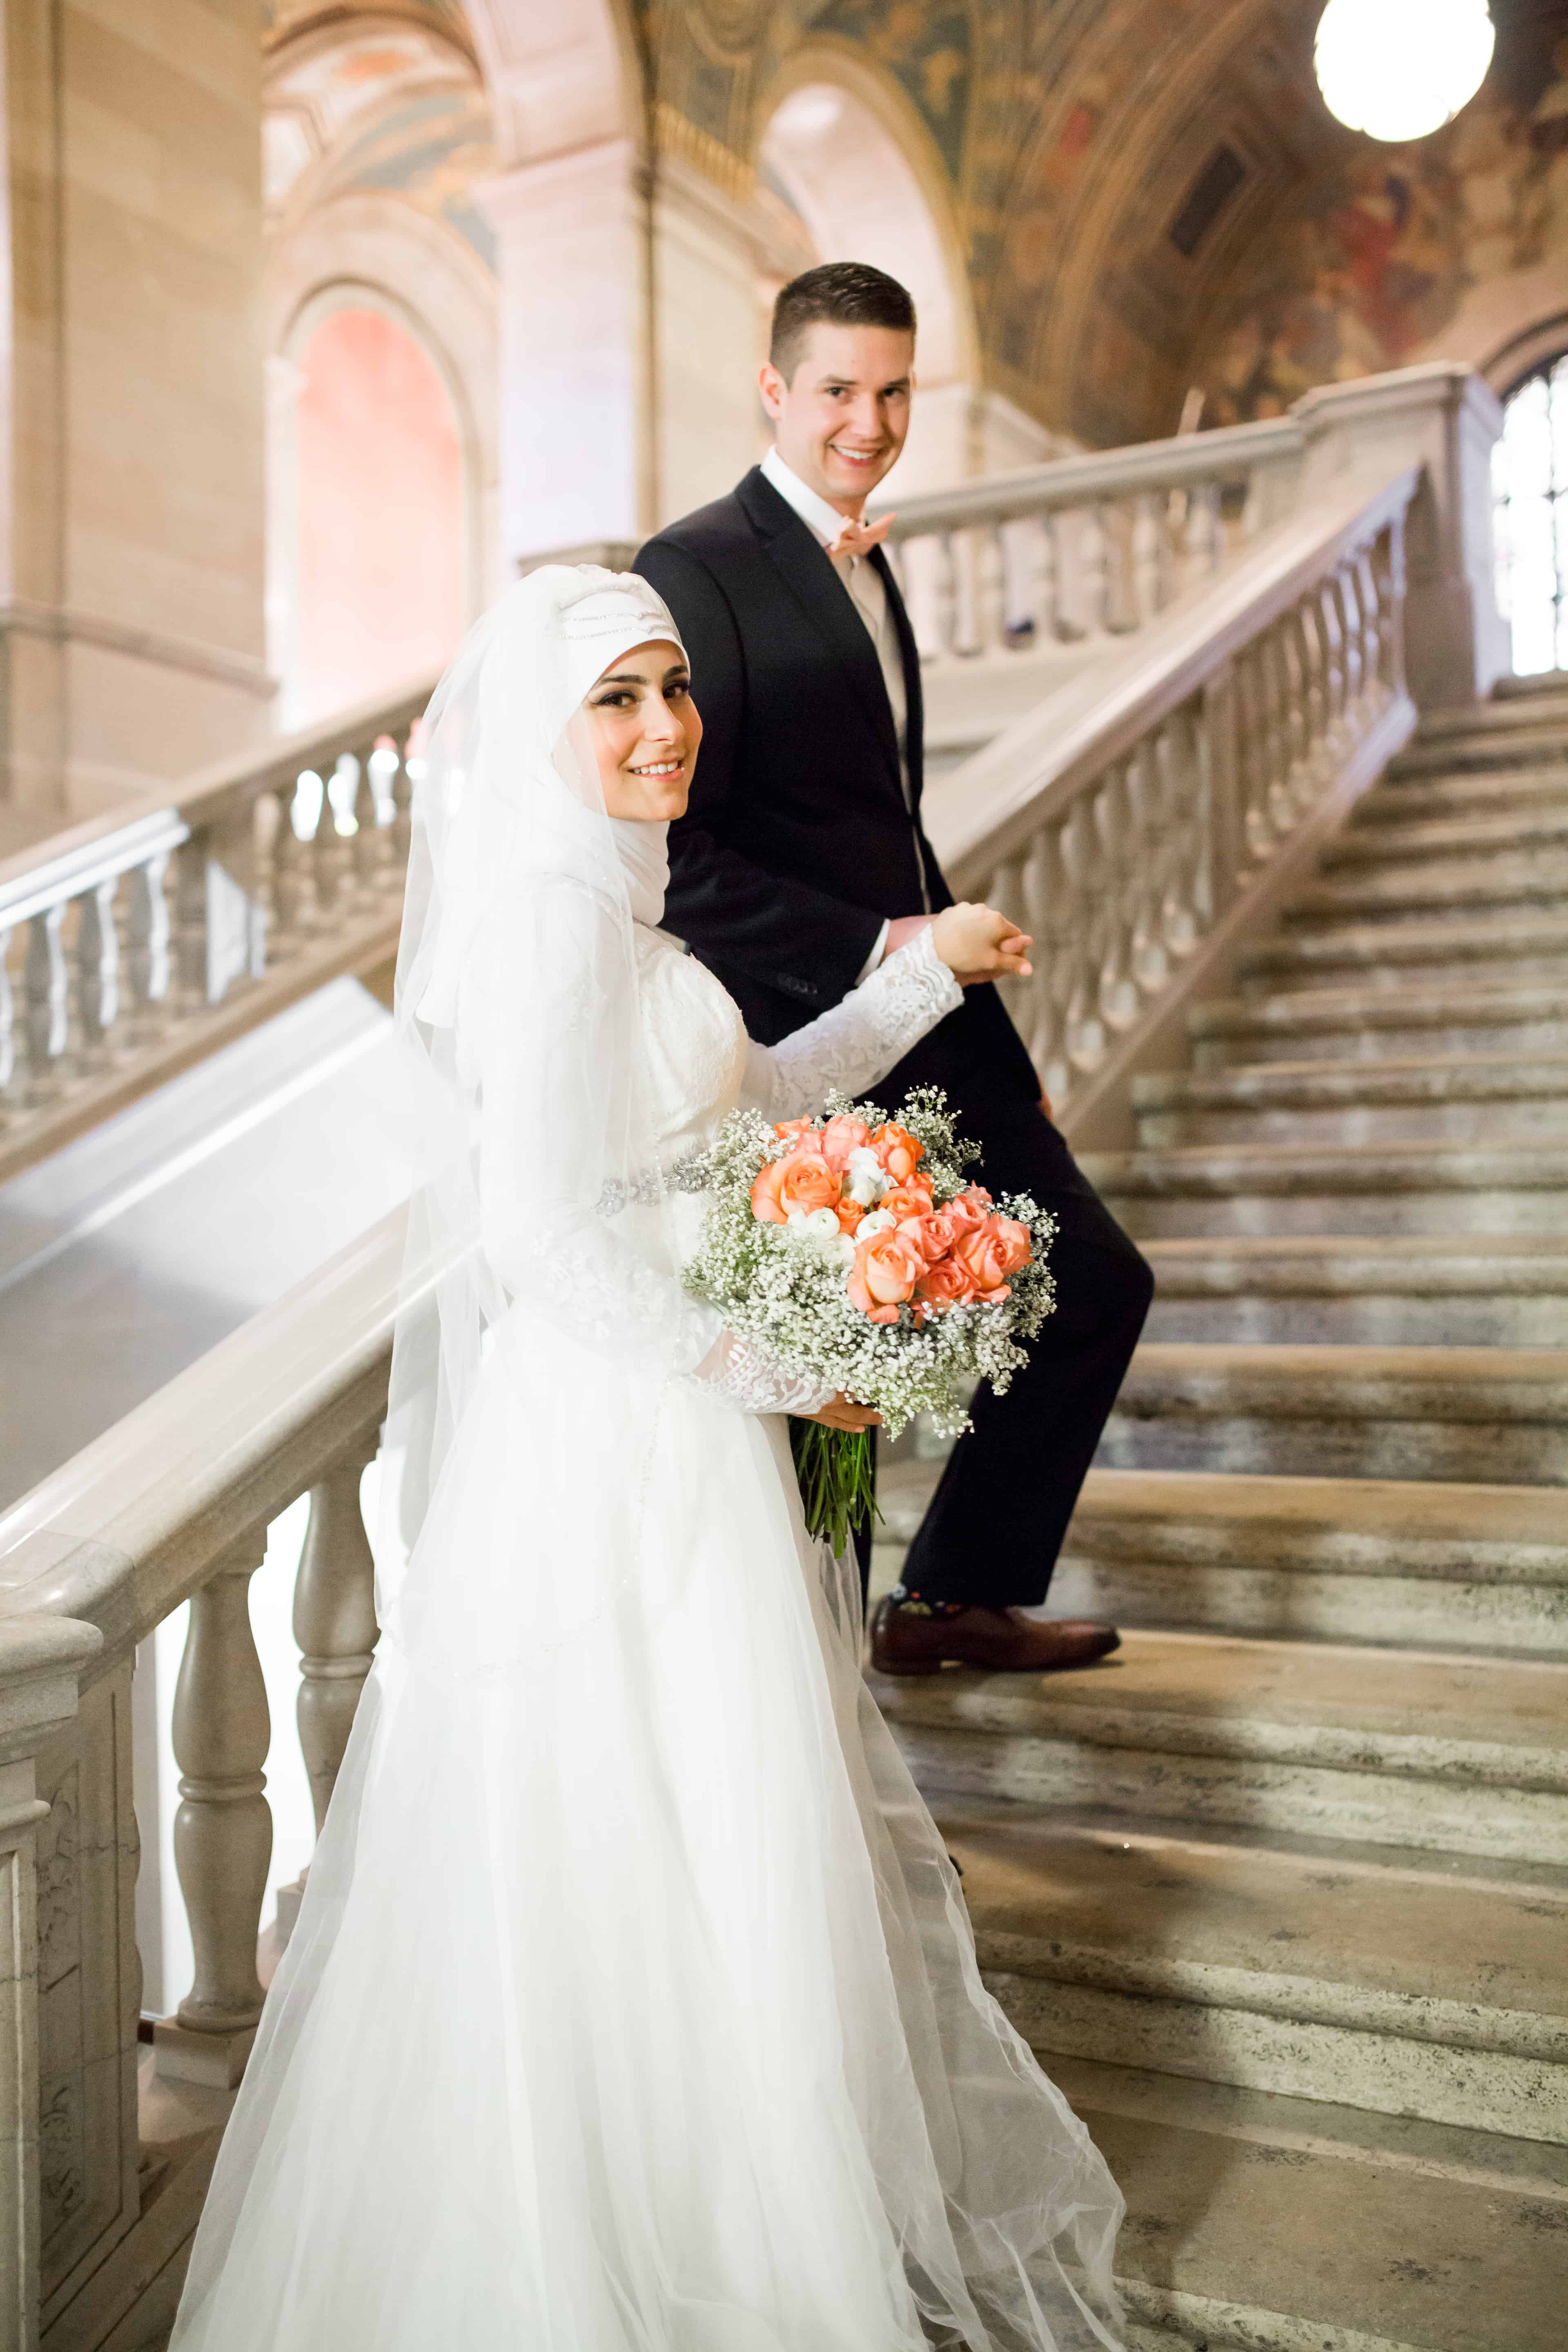 Houda & Ken | Detroit Public Library | Wedding